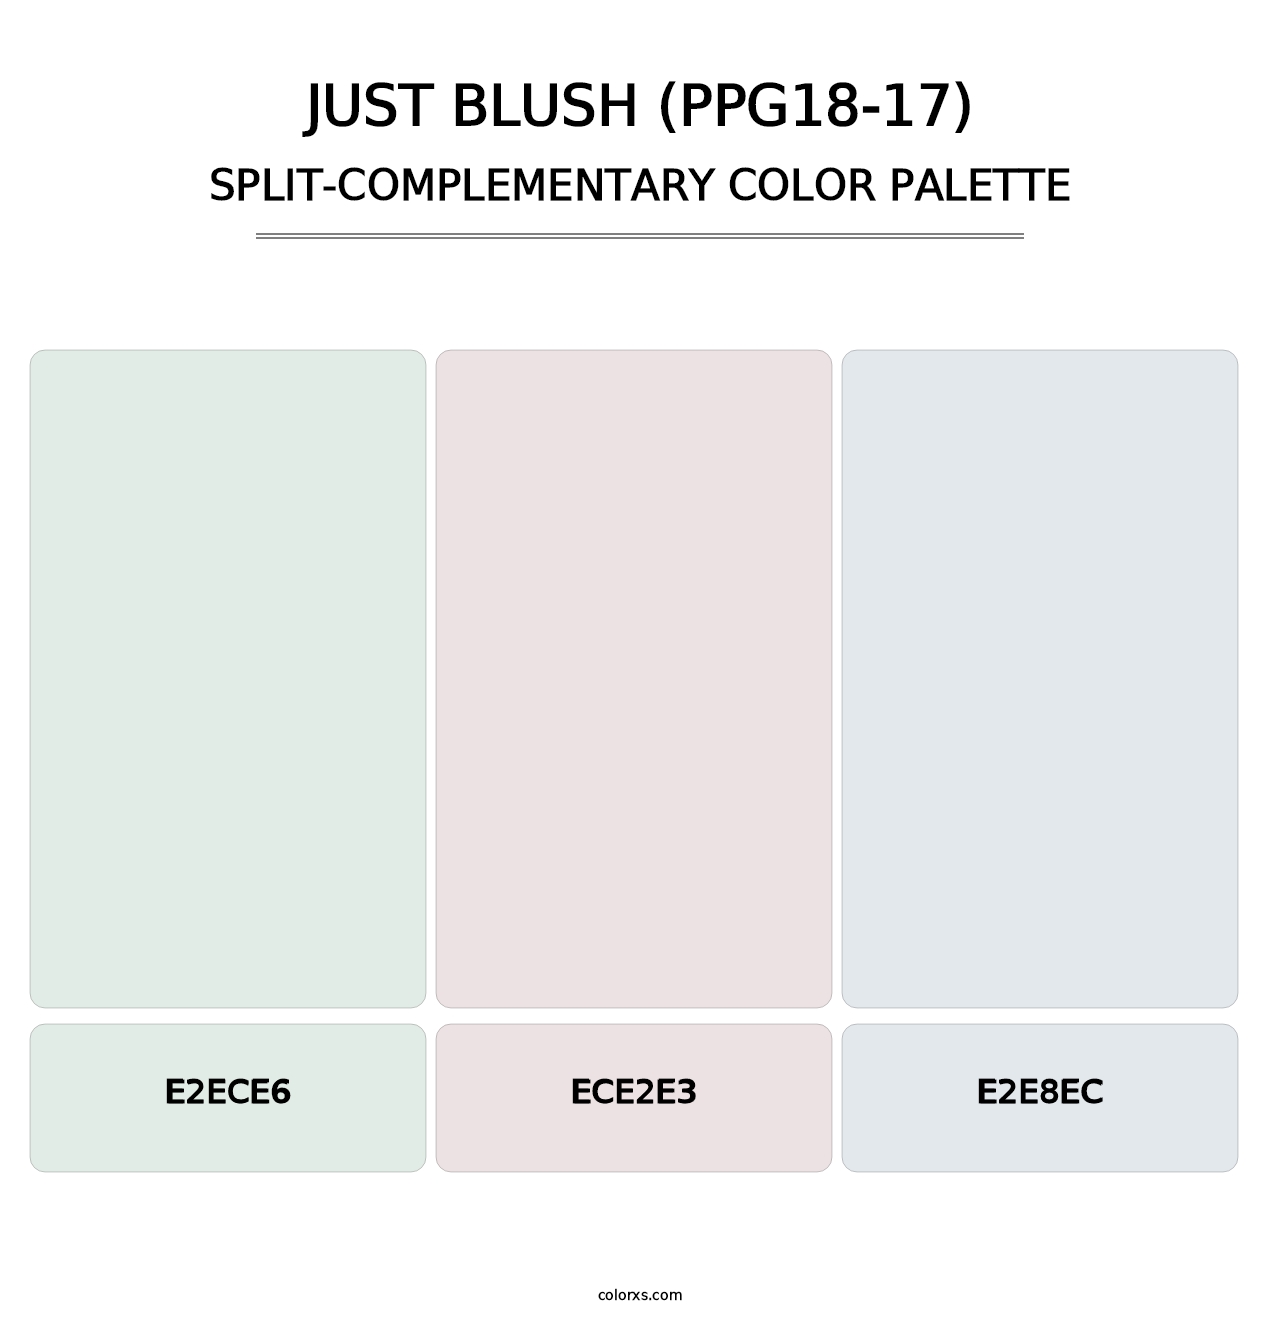 Just Blush (PPG18-17) - Split-Complementary Color Palette